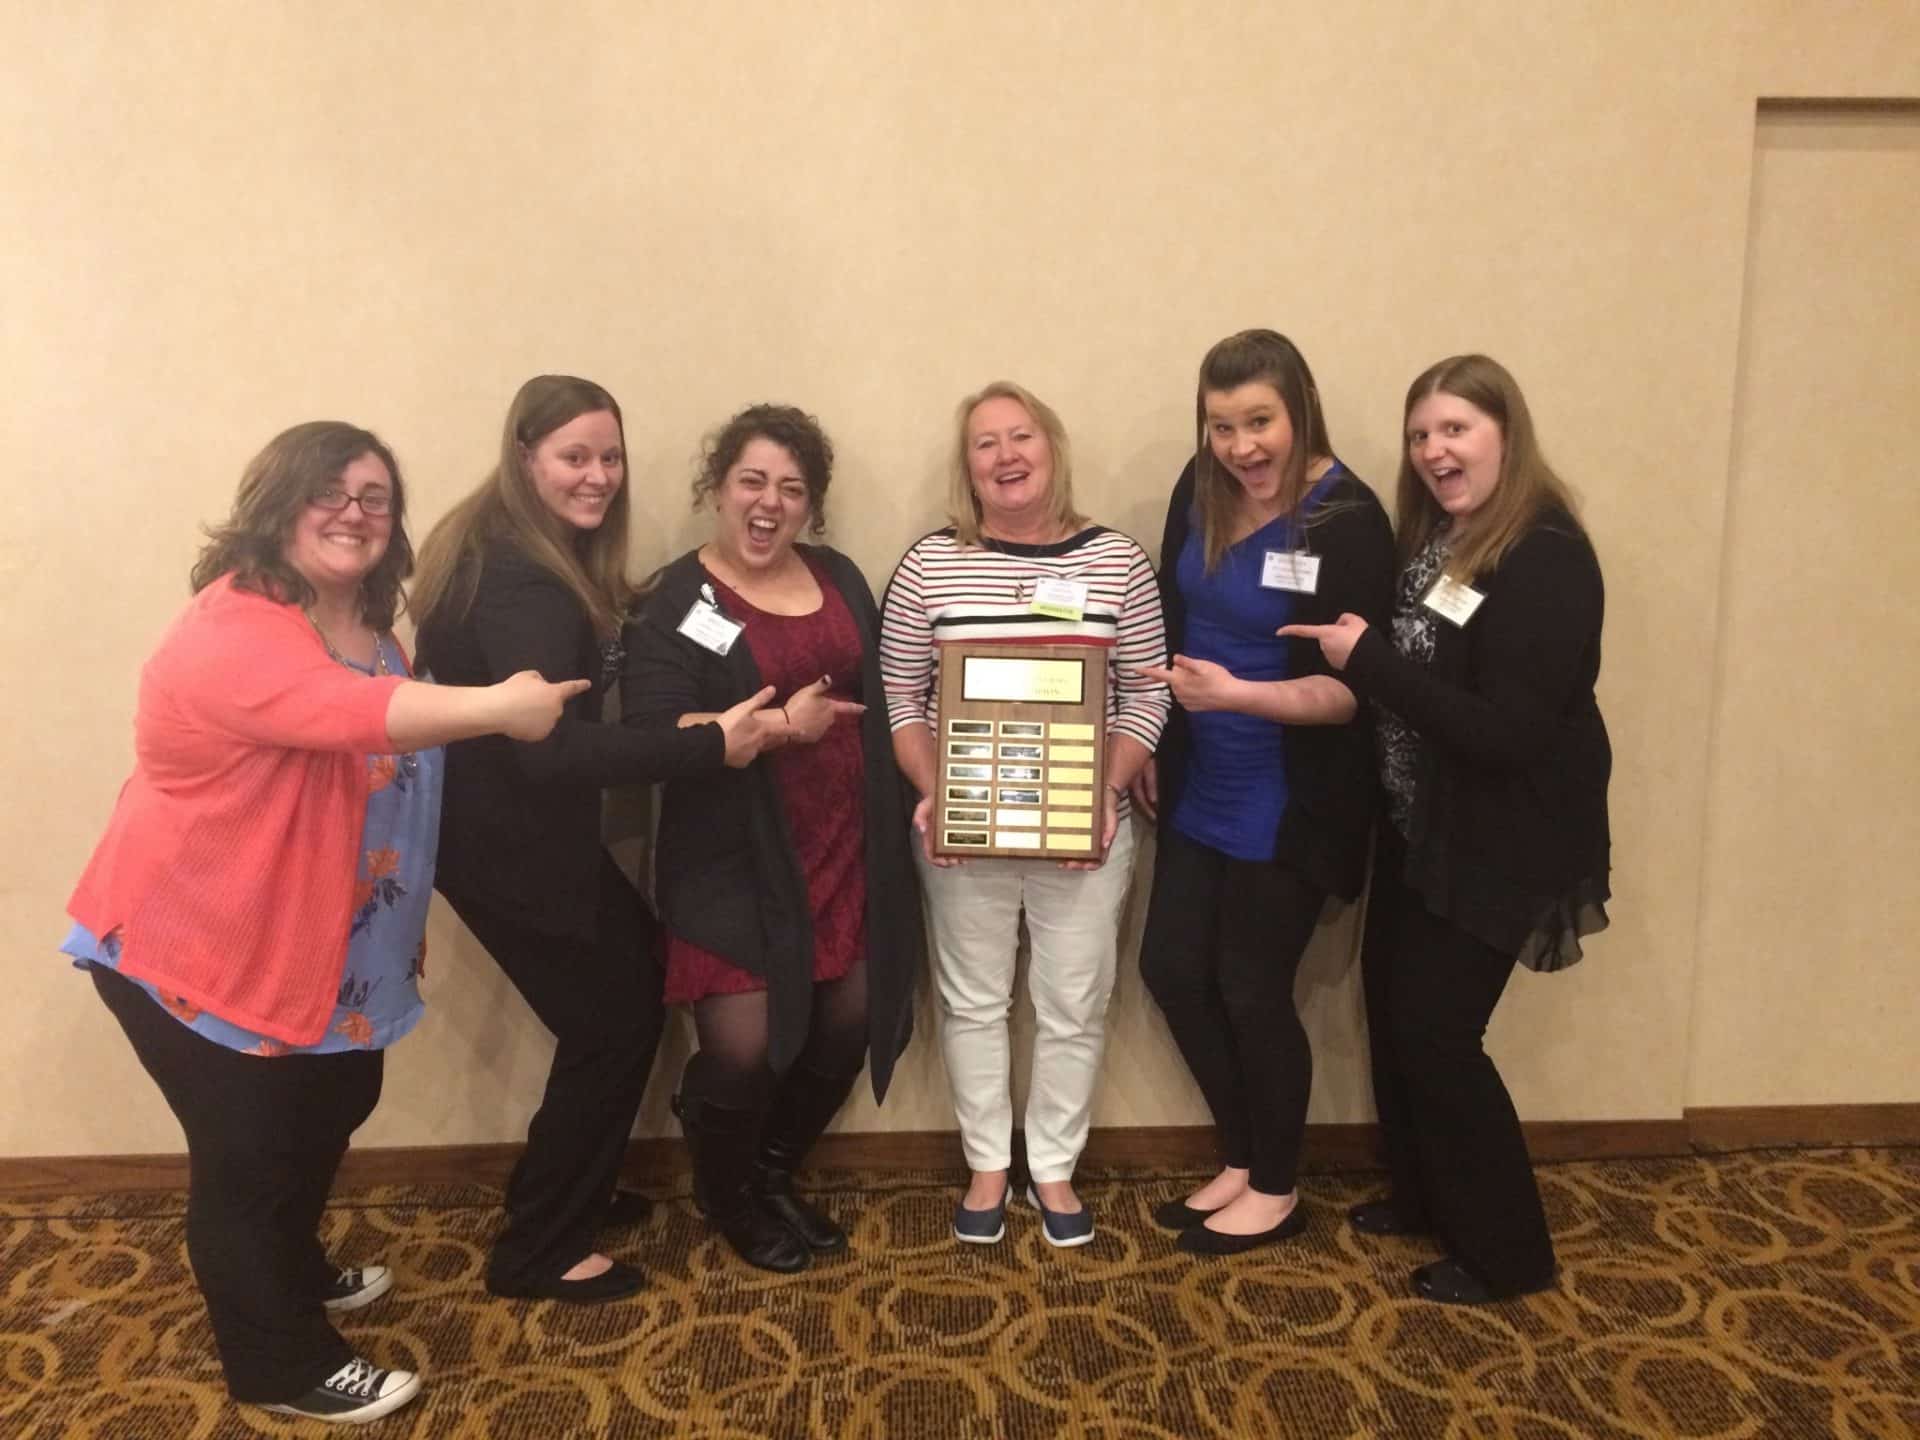 6 ladies holding a winning plaque